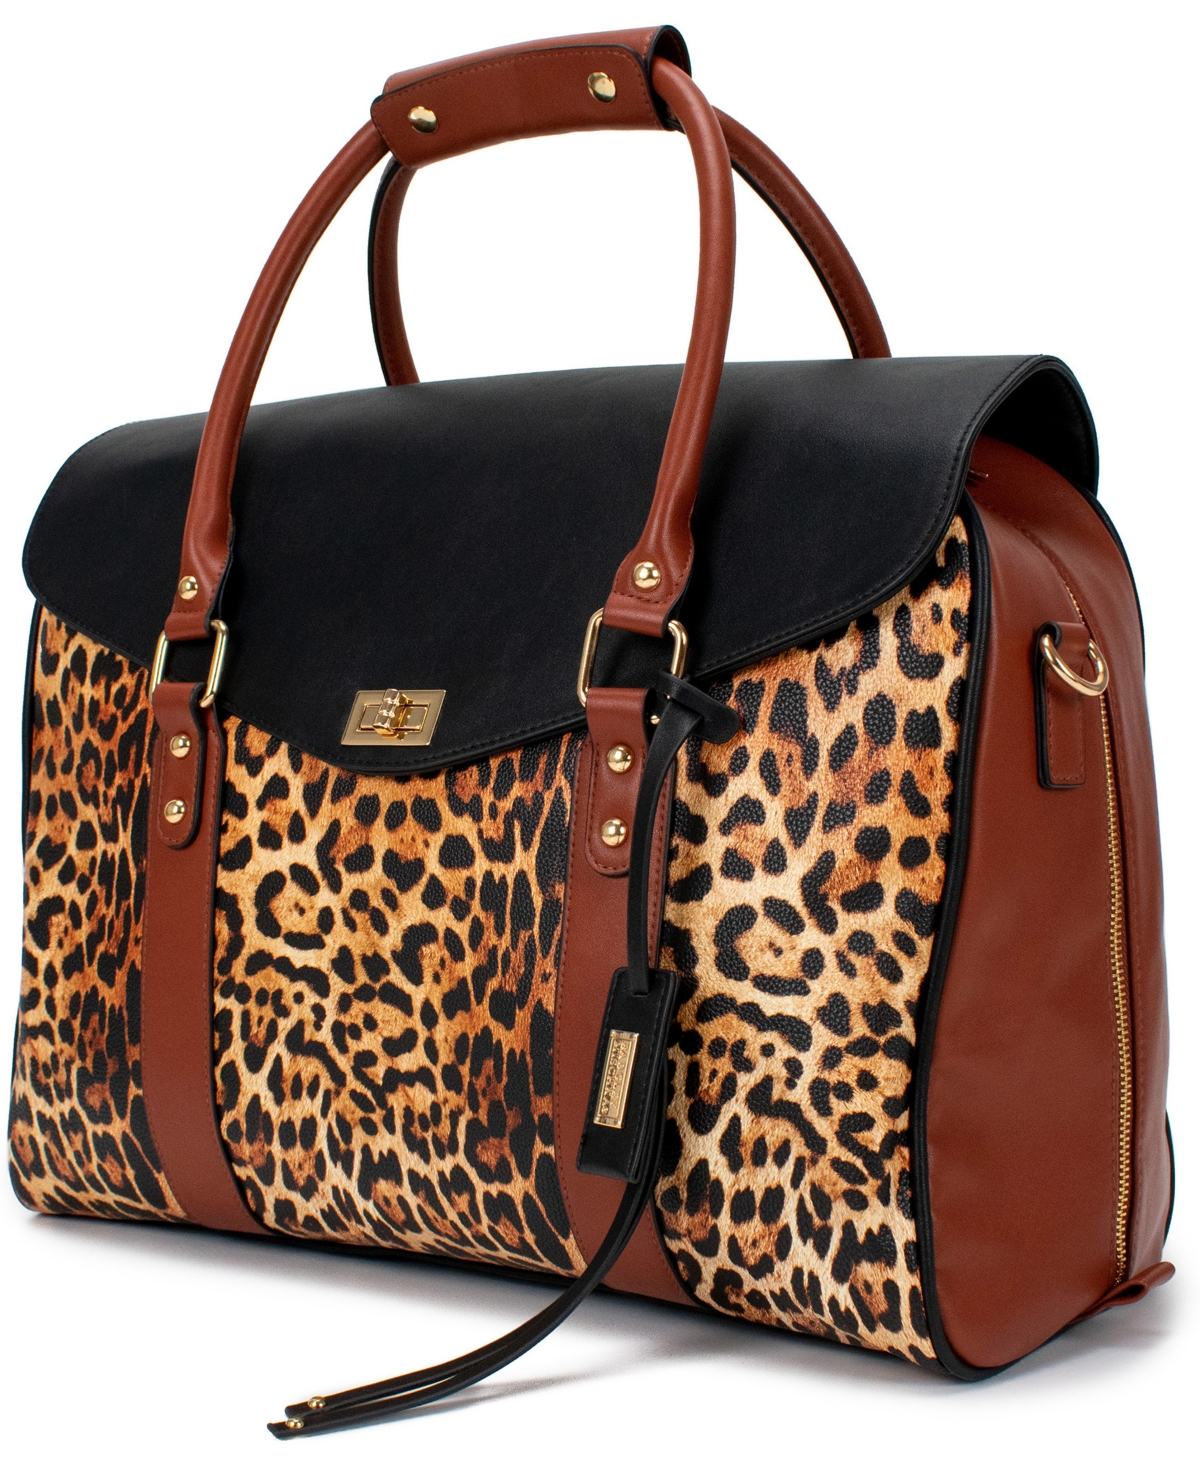 Leopard Travel Tote Weekender Bag - Leopard